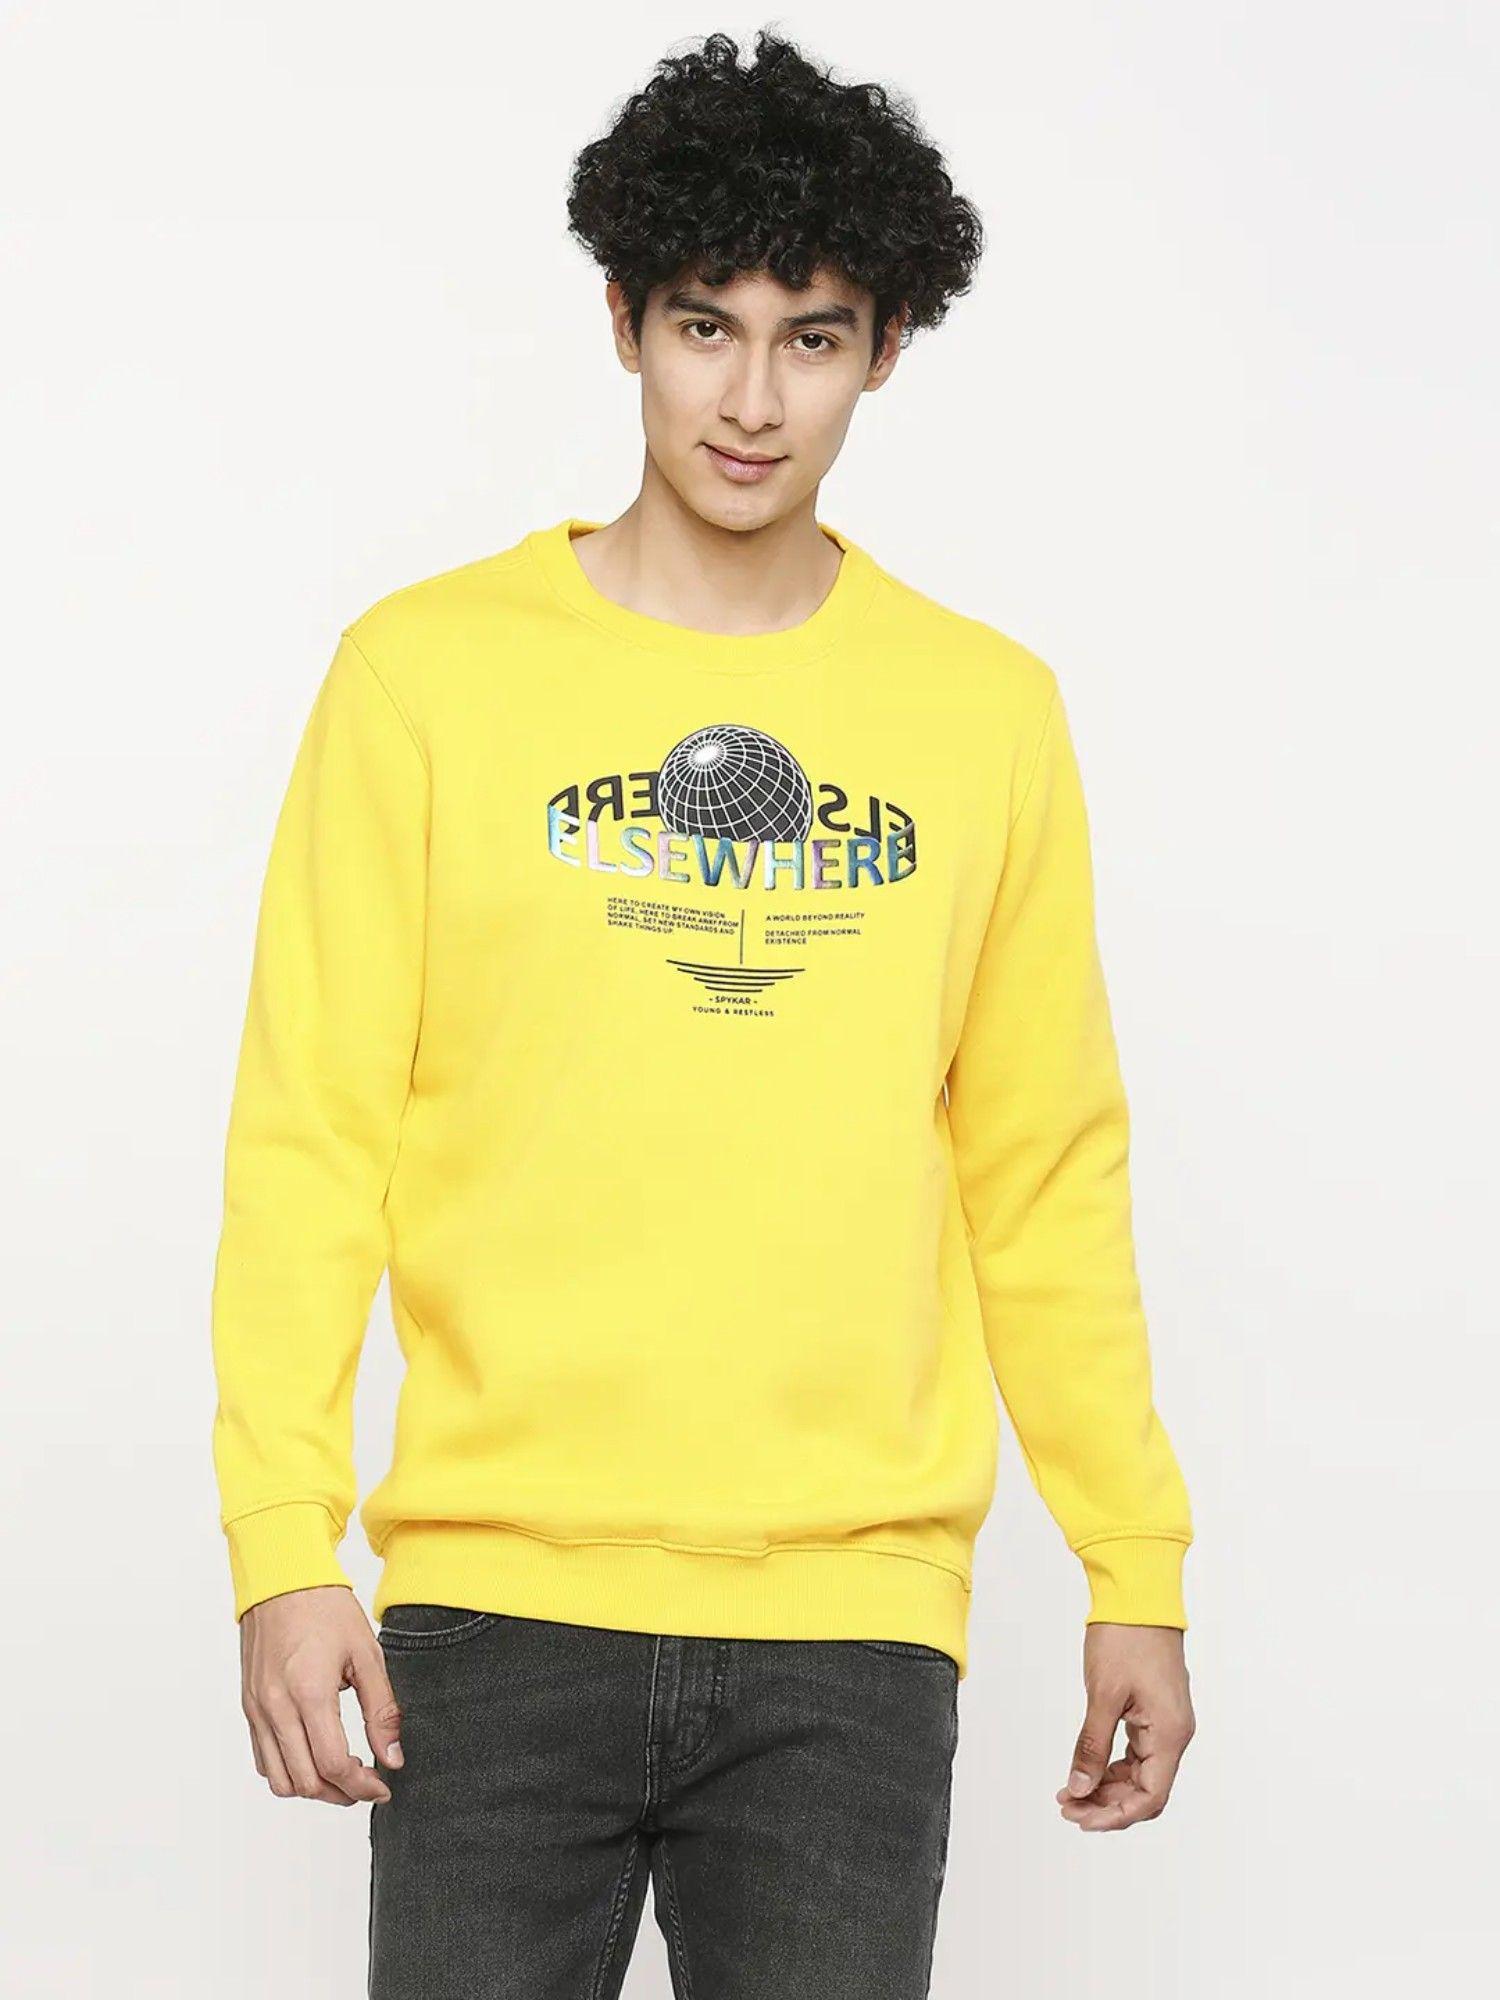 chrome yellow cotton full sleeve round neck sweatshirt